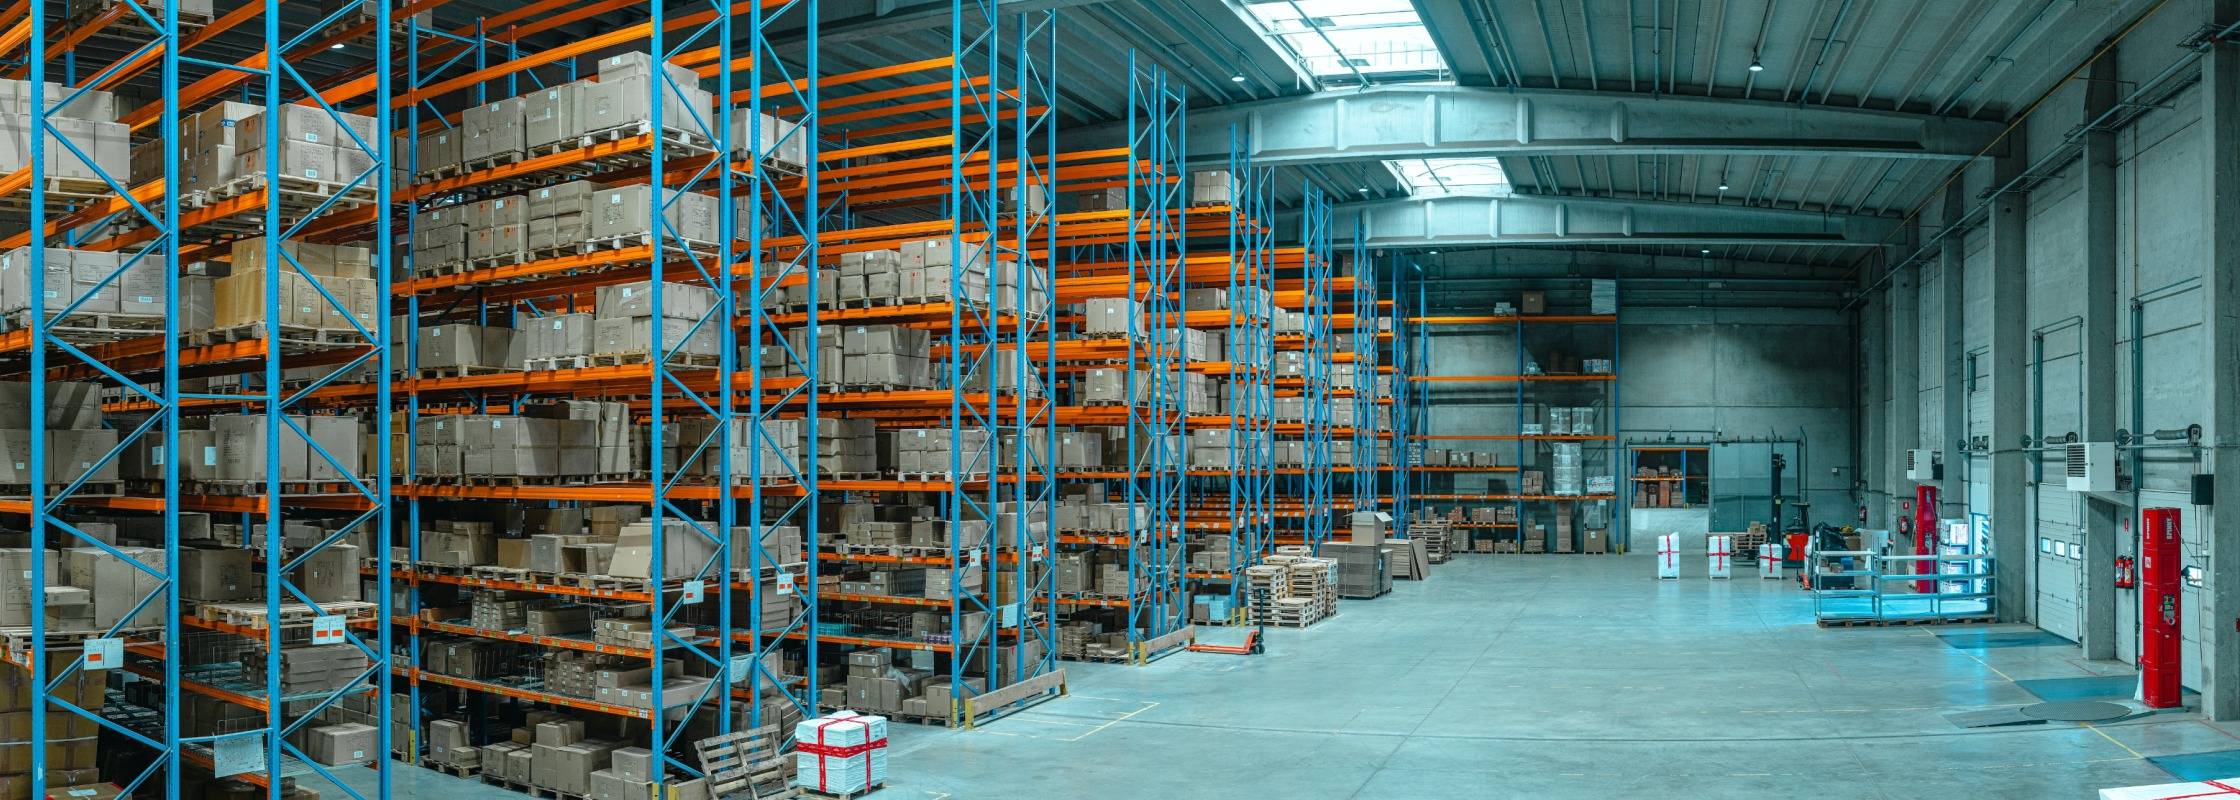 Supply Chain and warehousing management